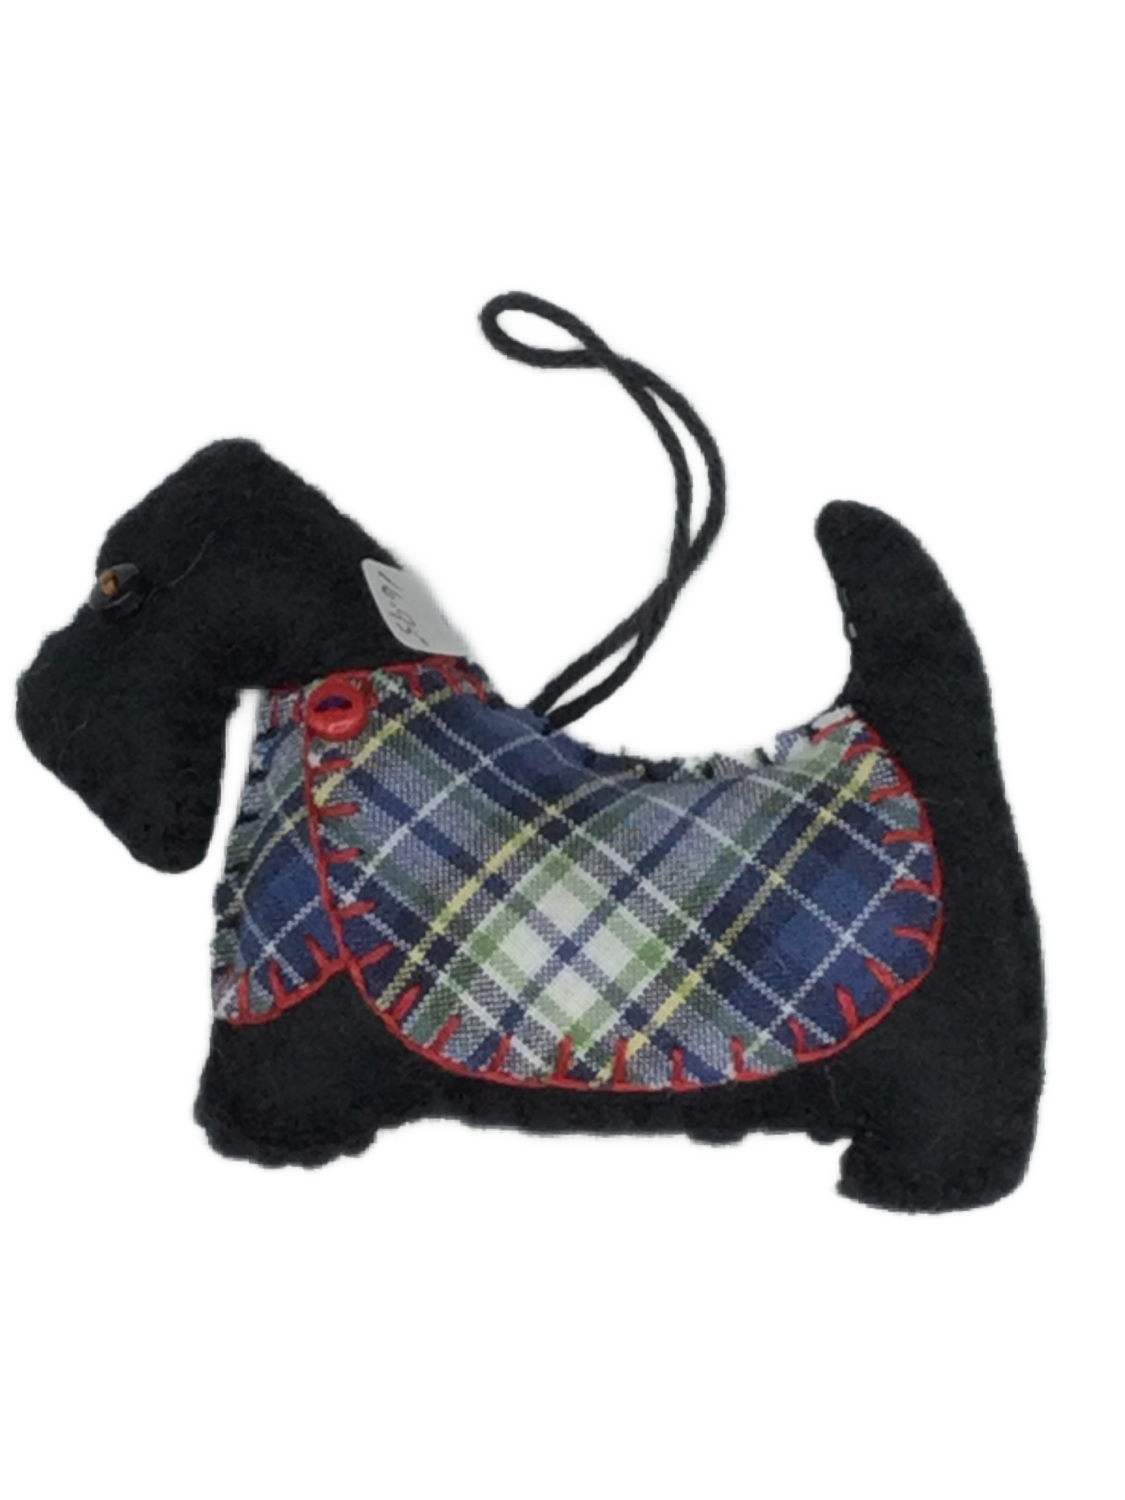 Felted Scottish Terrier Dog Ornament